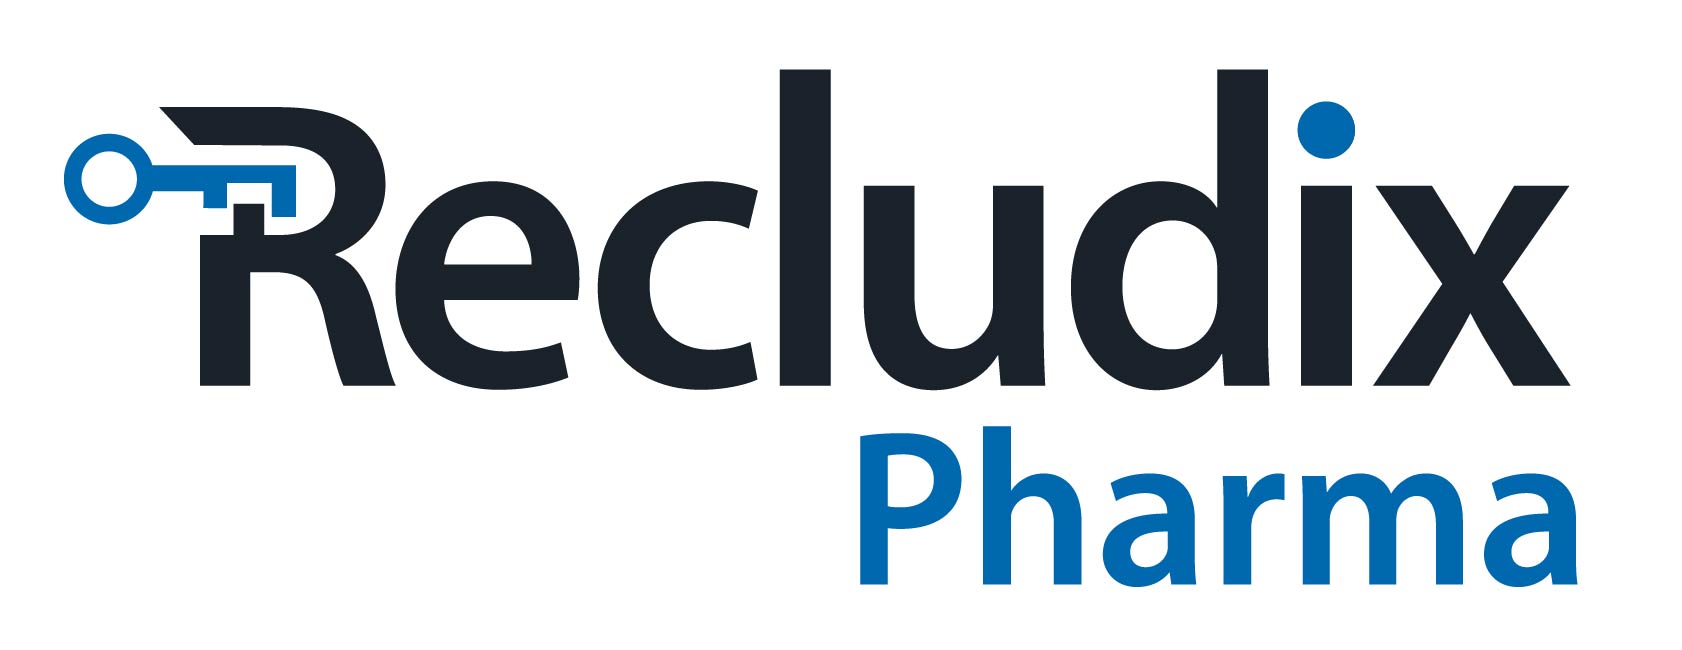 Recludix Pharma